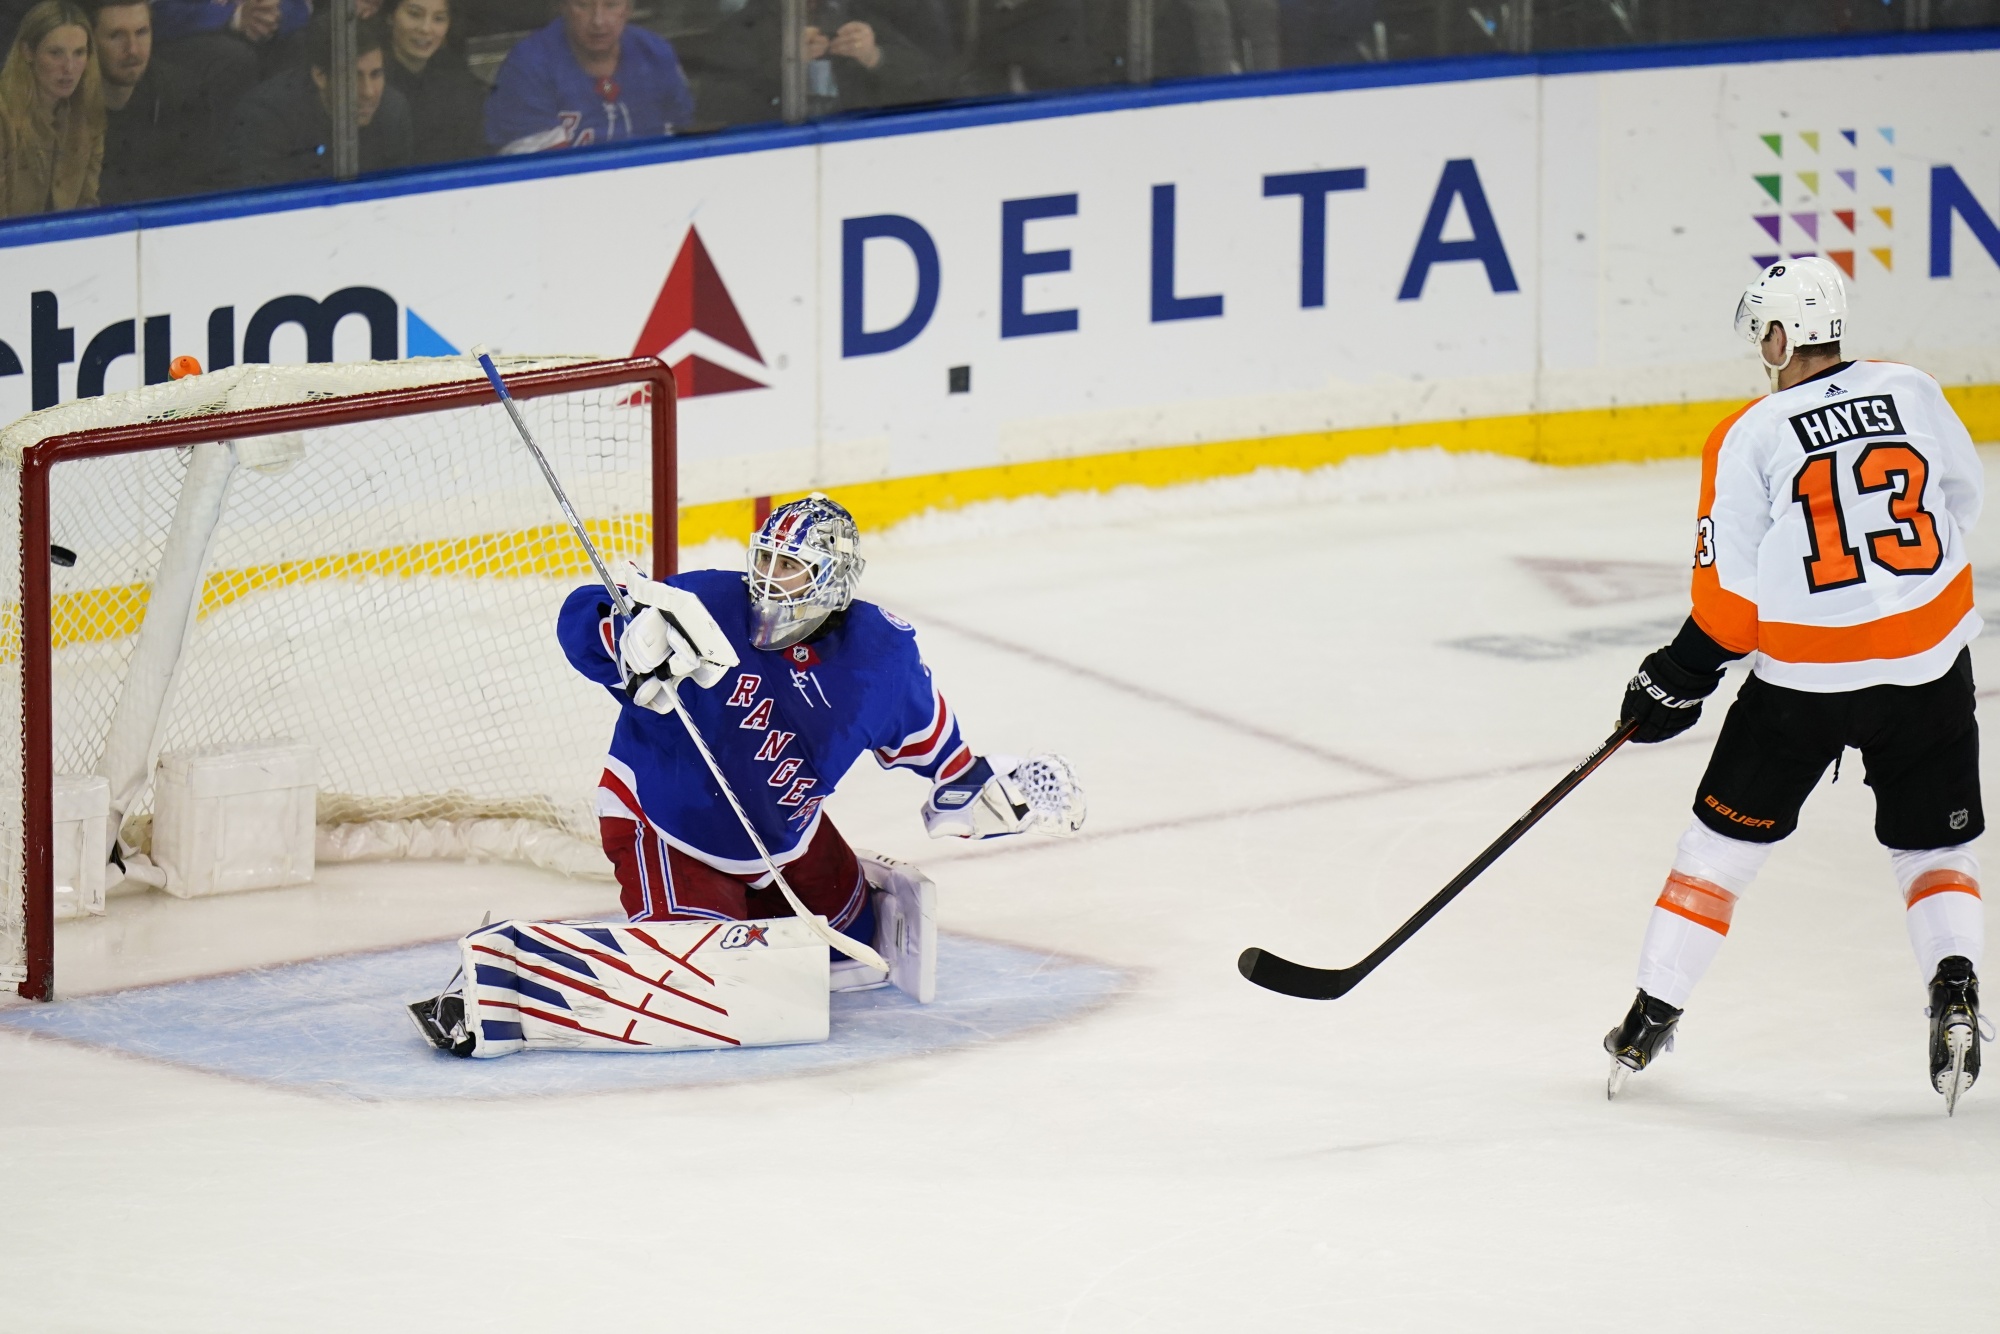 Five Stars score in 1st regulation win, 5-2 over Flyers